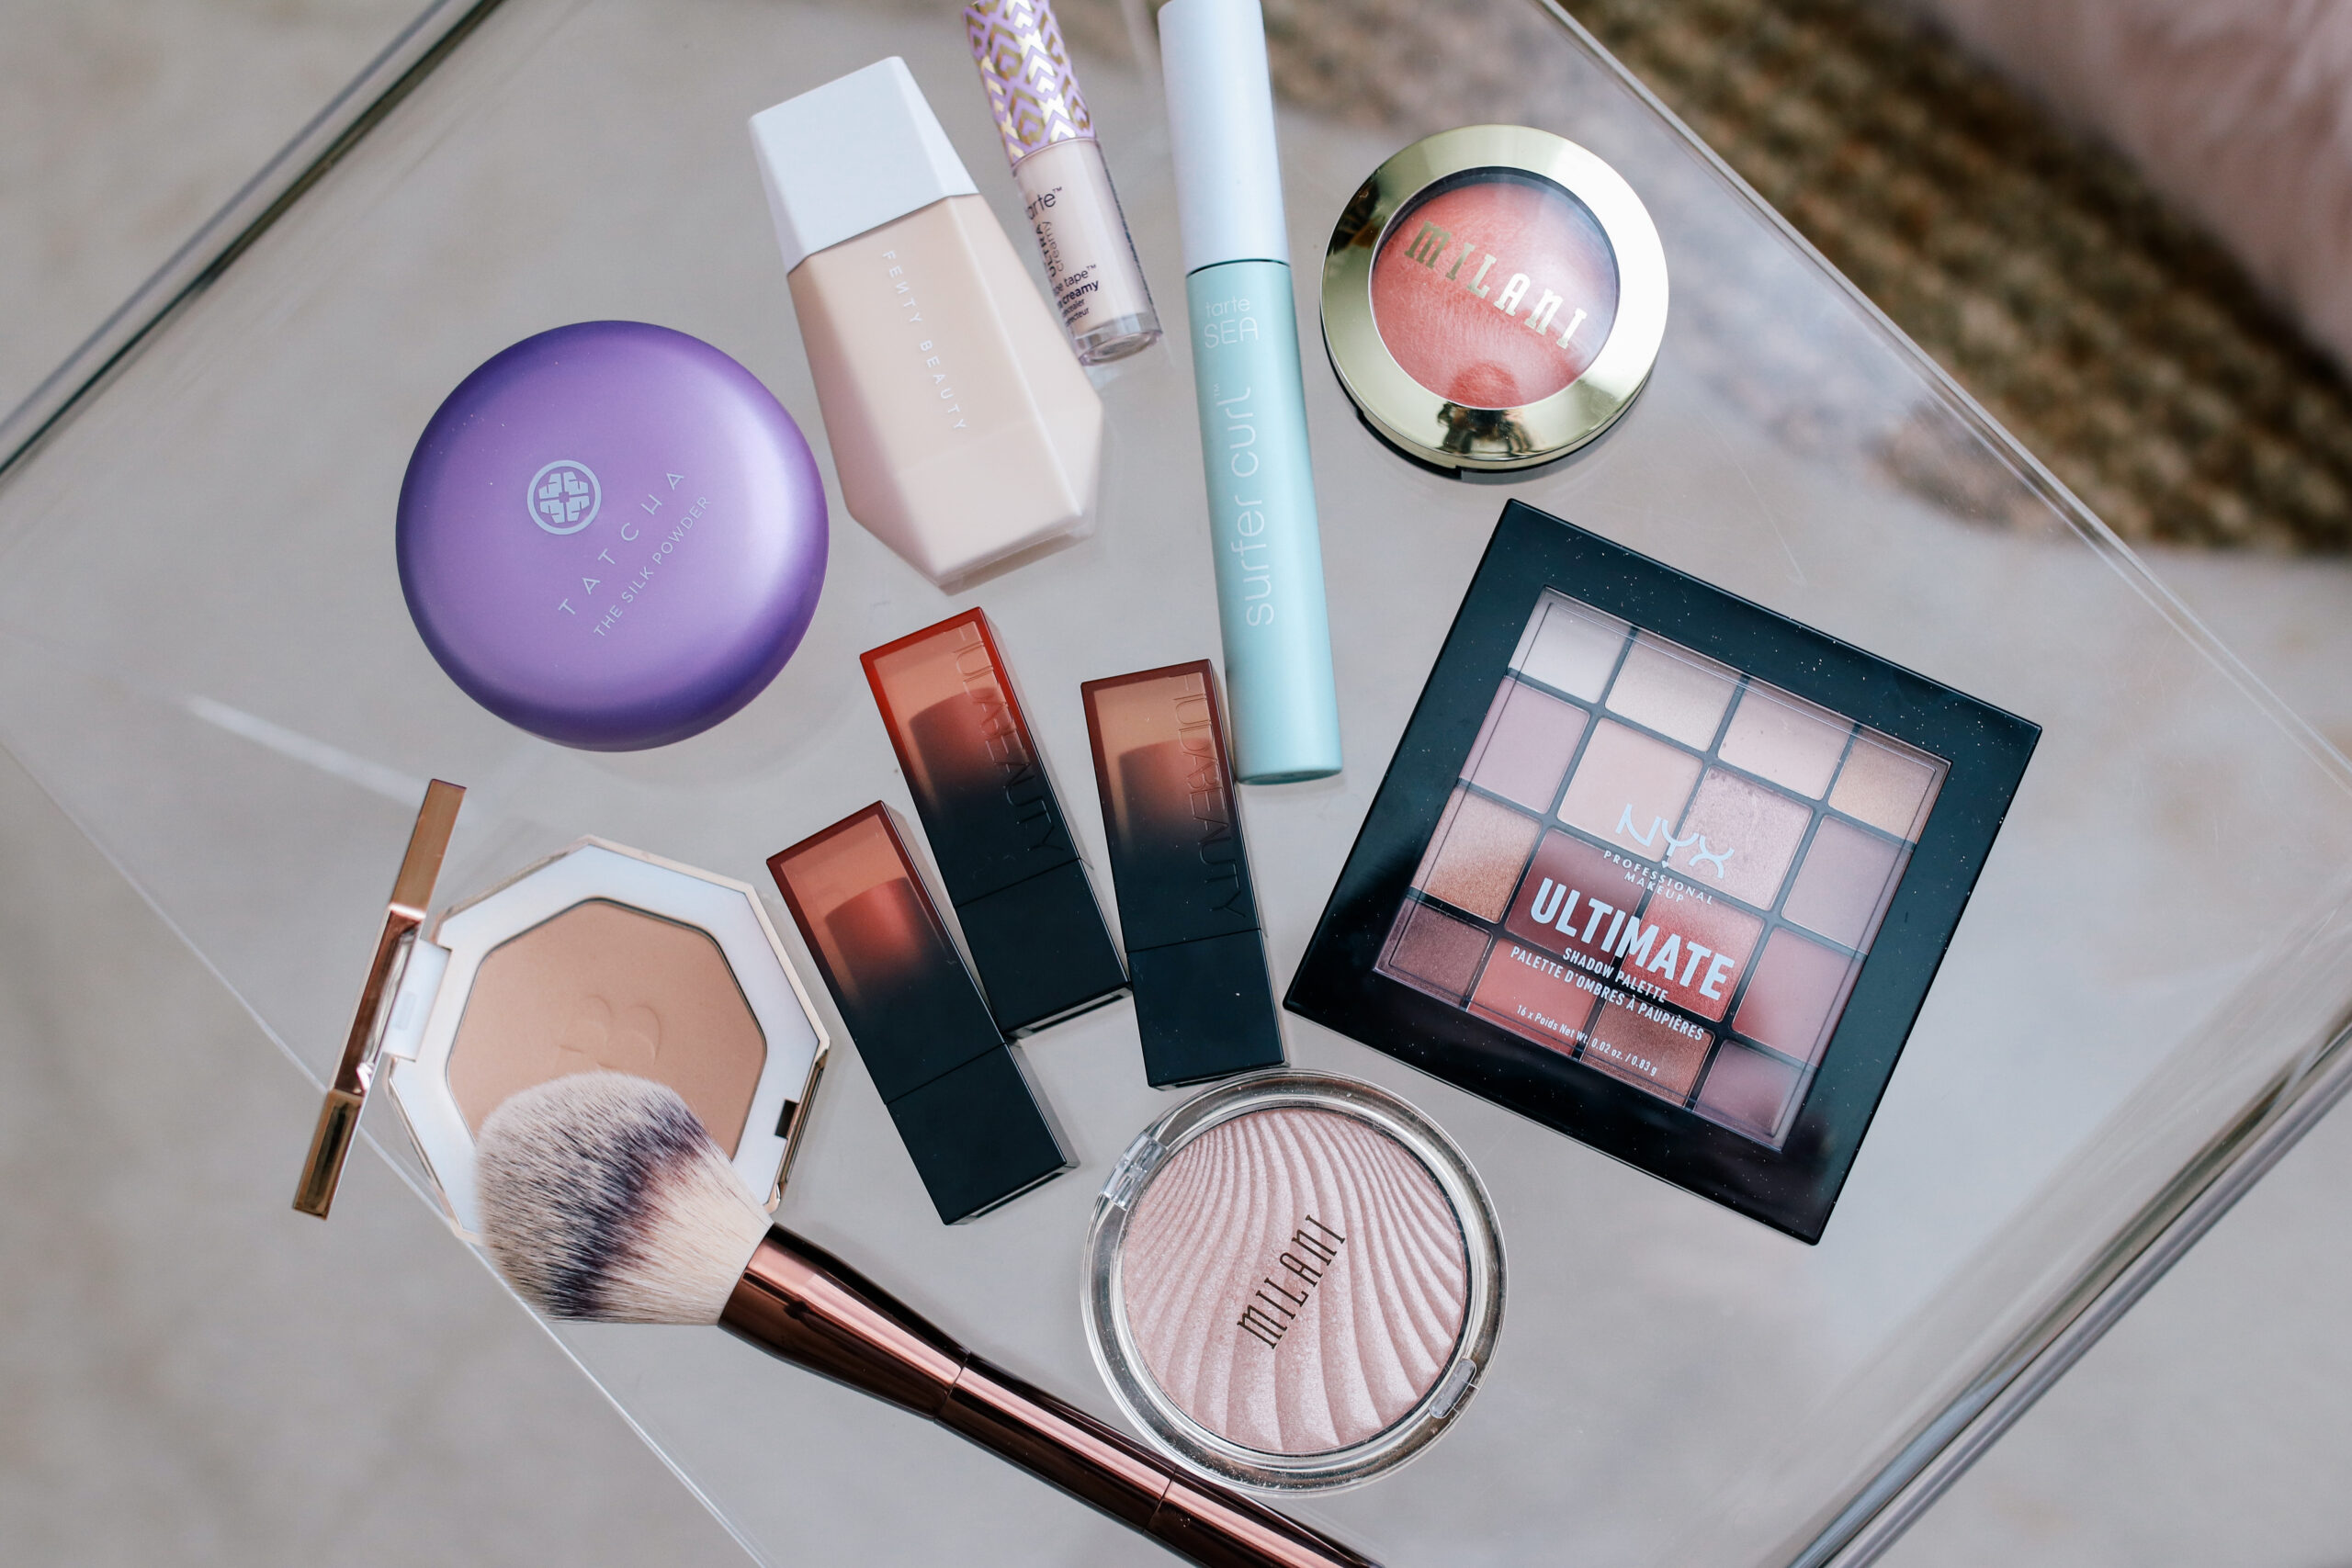 Fenty Blurring Skin Tint Review + Spring Makeup Tutorial - alittlebitetc